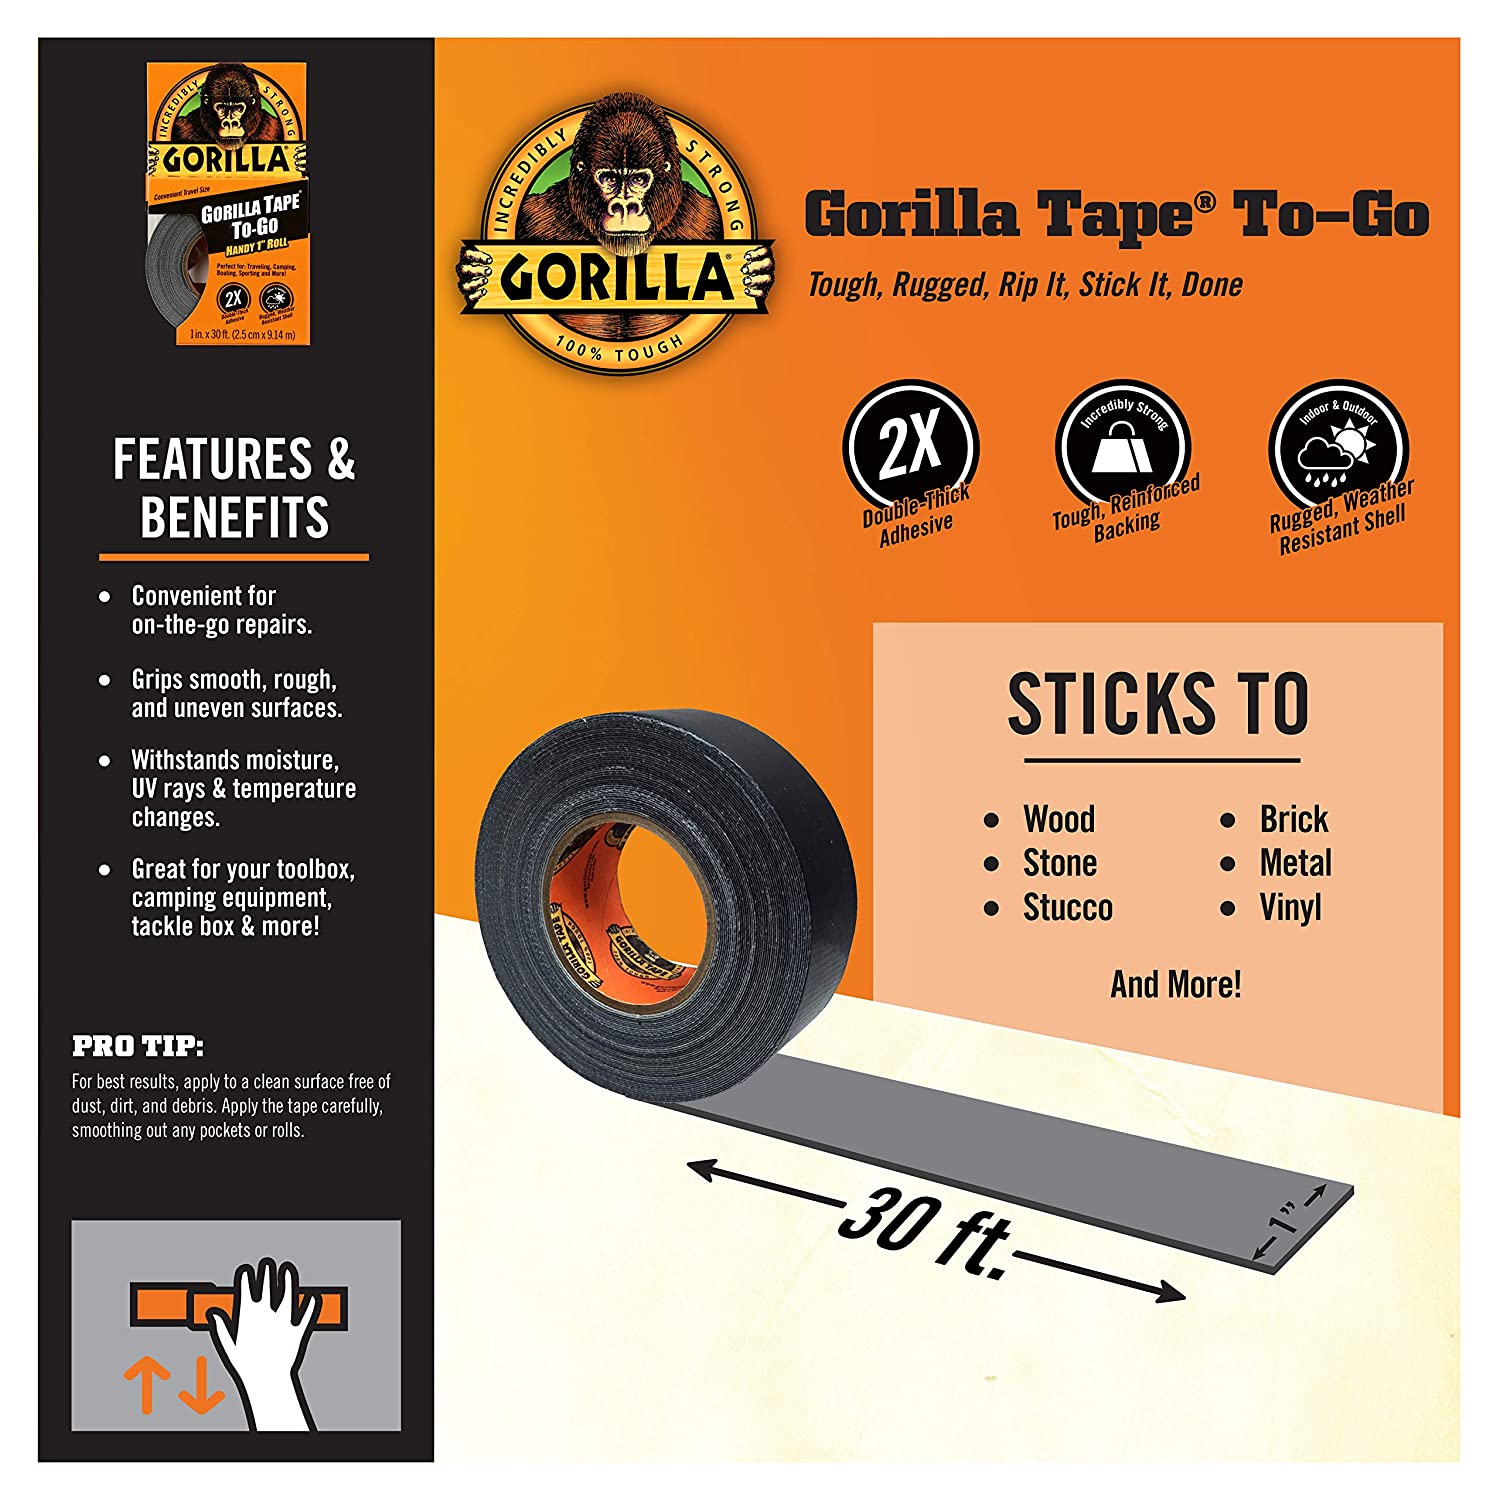 Black Gorilla Tape Handy 1" X 30 Ft Roll